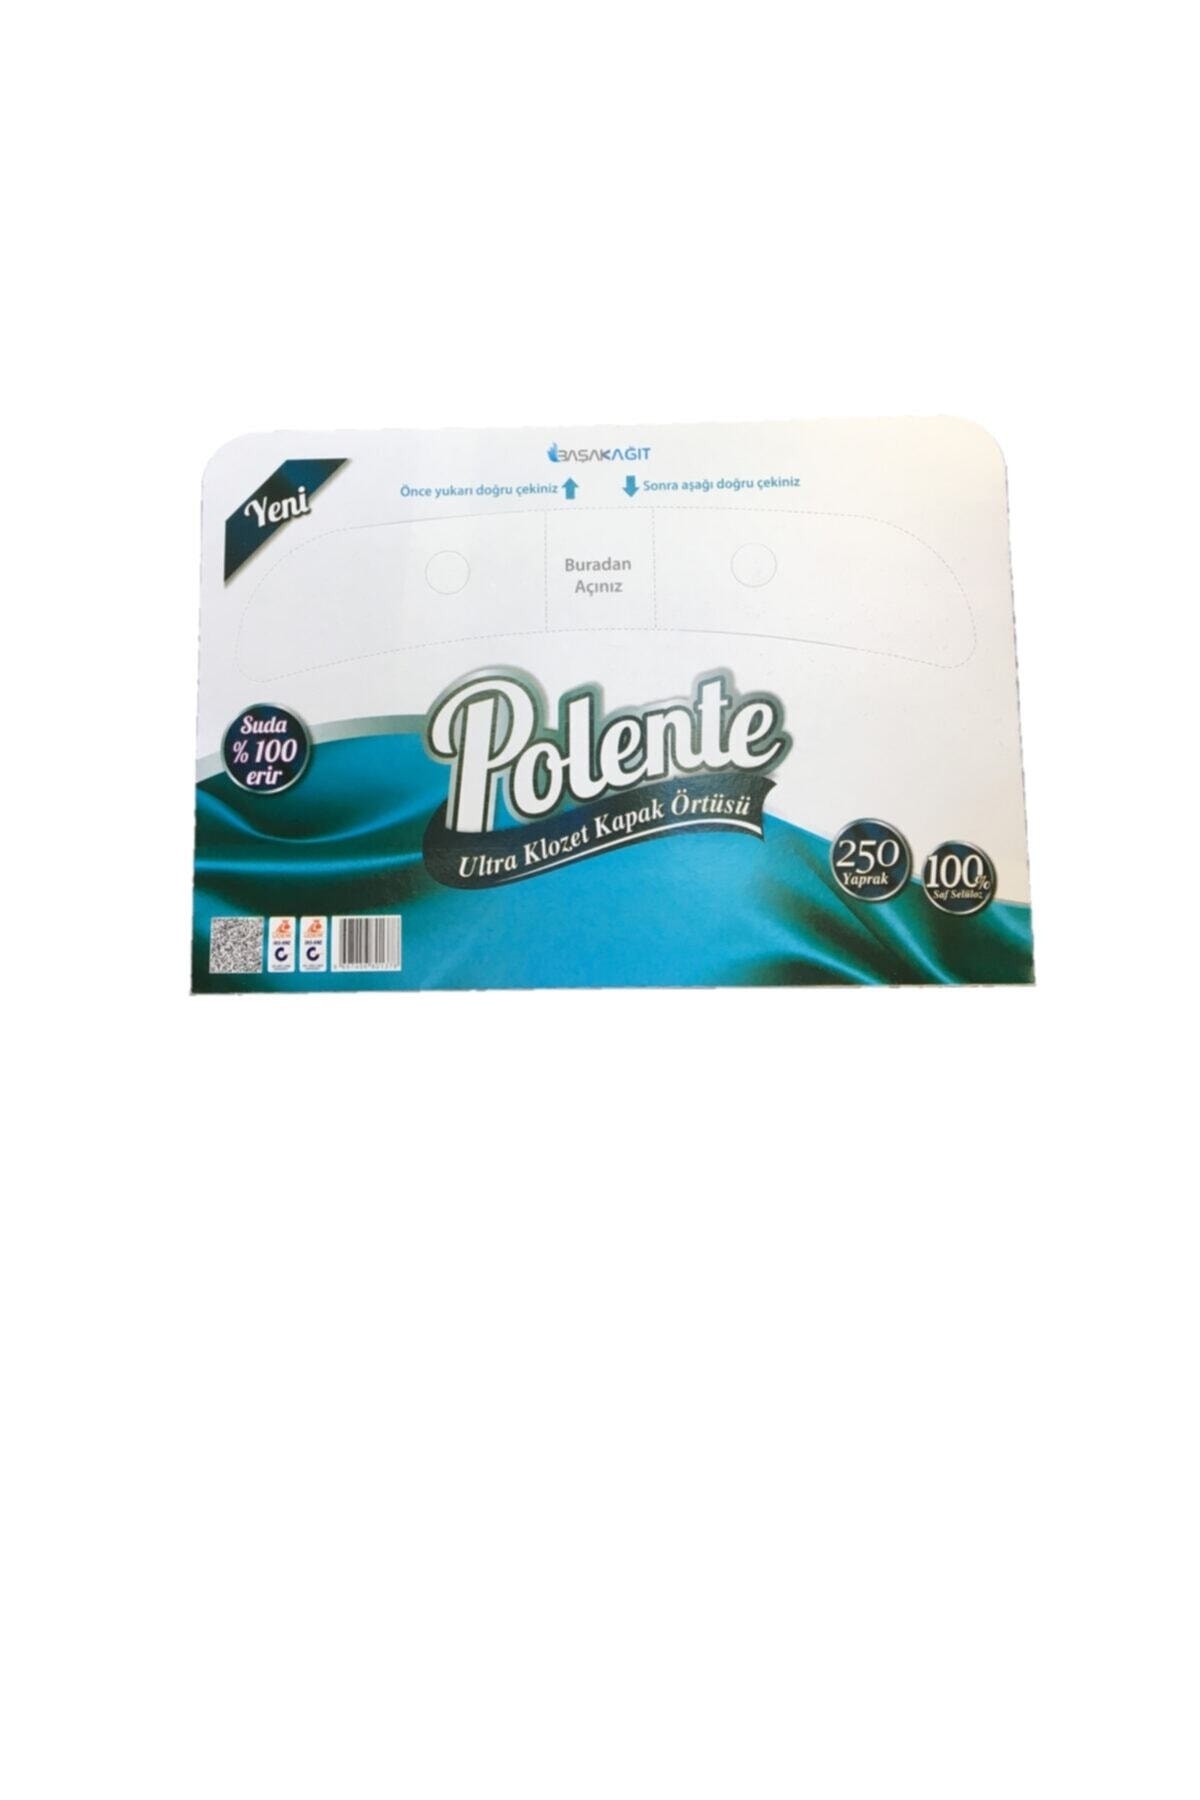 Polente Klozet Kapak Örtüsü (250'li Paket) Kullan At Suda Eriyen Kağıt Aa+ Kalite